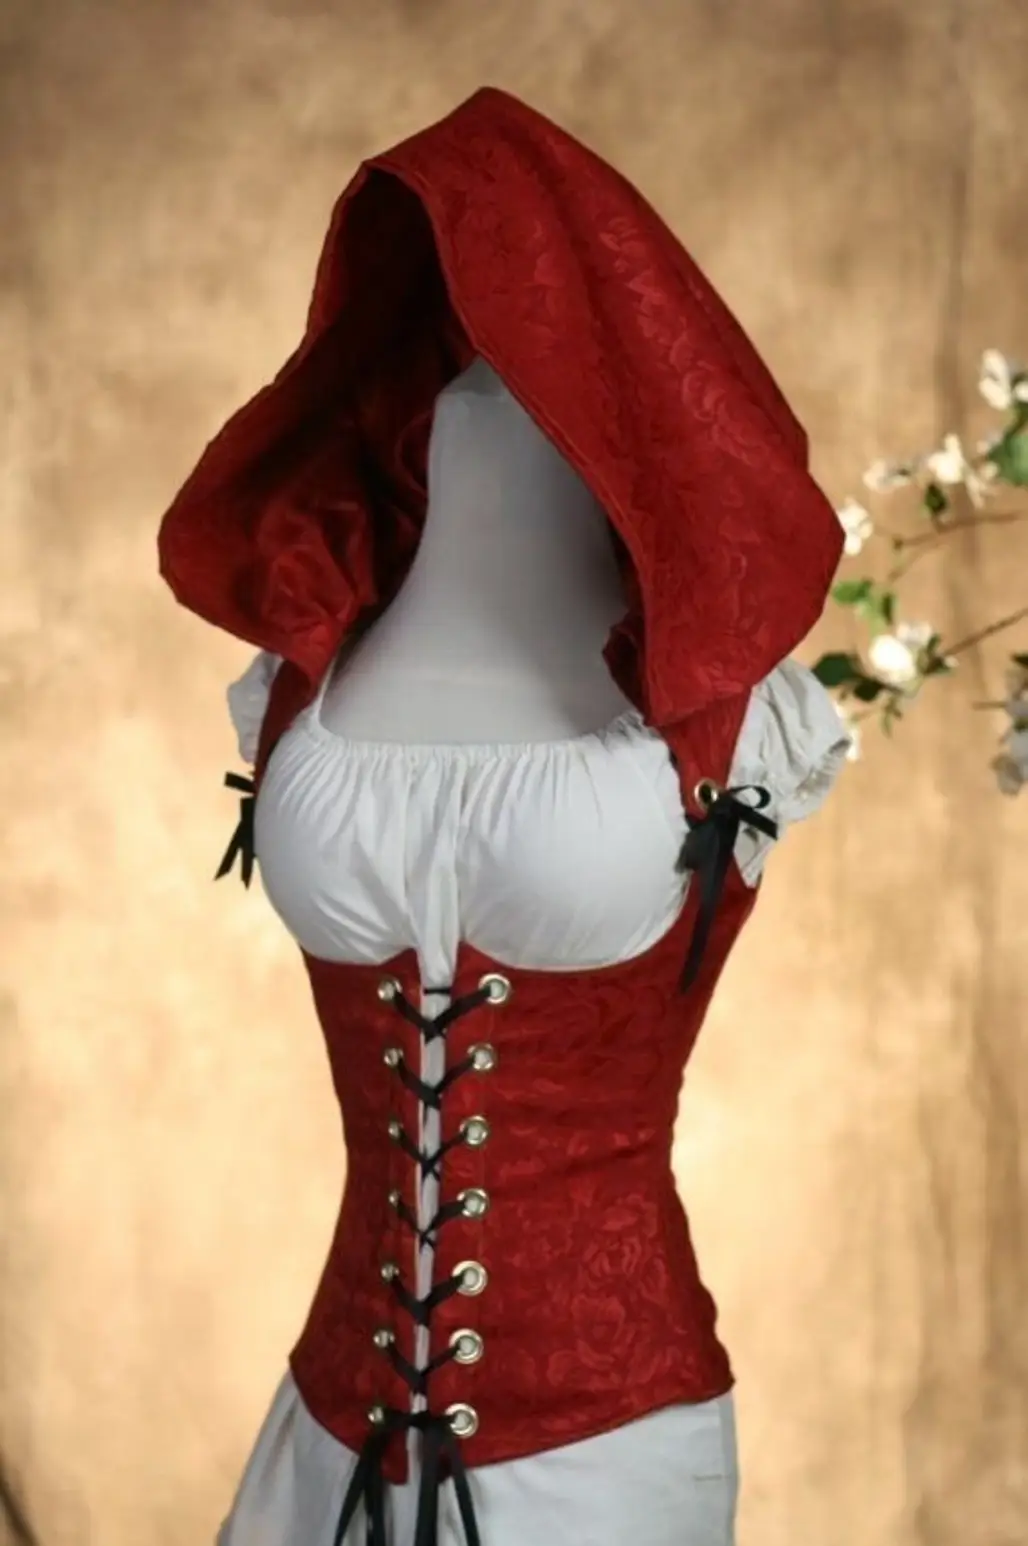 red,clothing,lady,undergarment,organ,